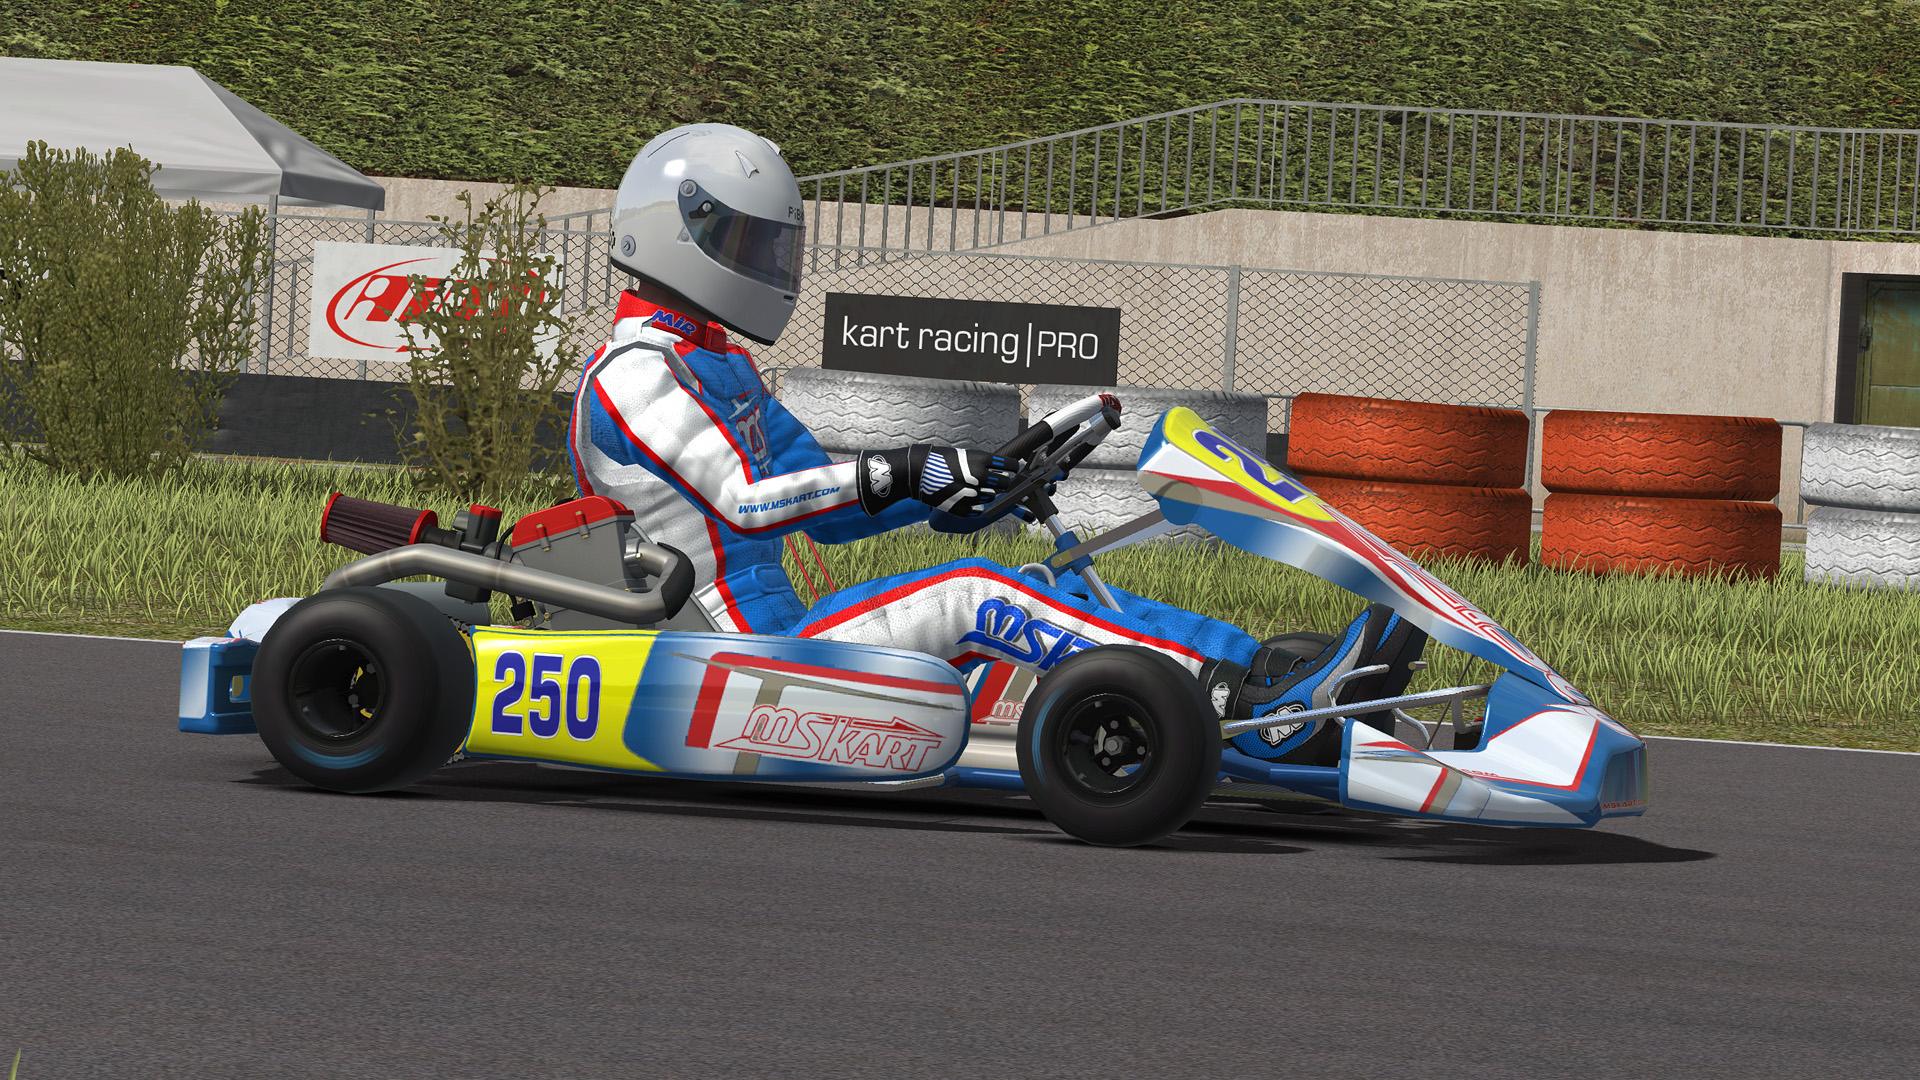 Карт рейсинг. Kart Racing Pro. Картинг GP Racing 2008 года. Картинг АКУ 89. Игры про картинг на ПК.